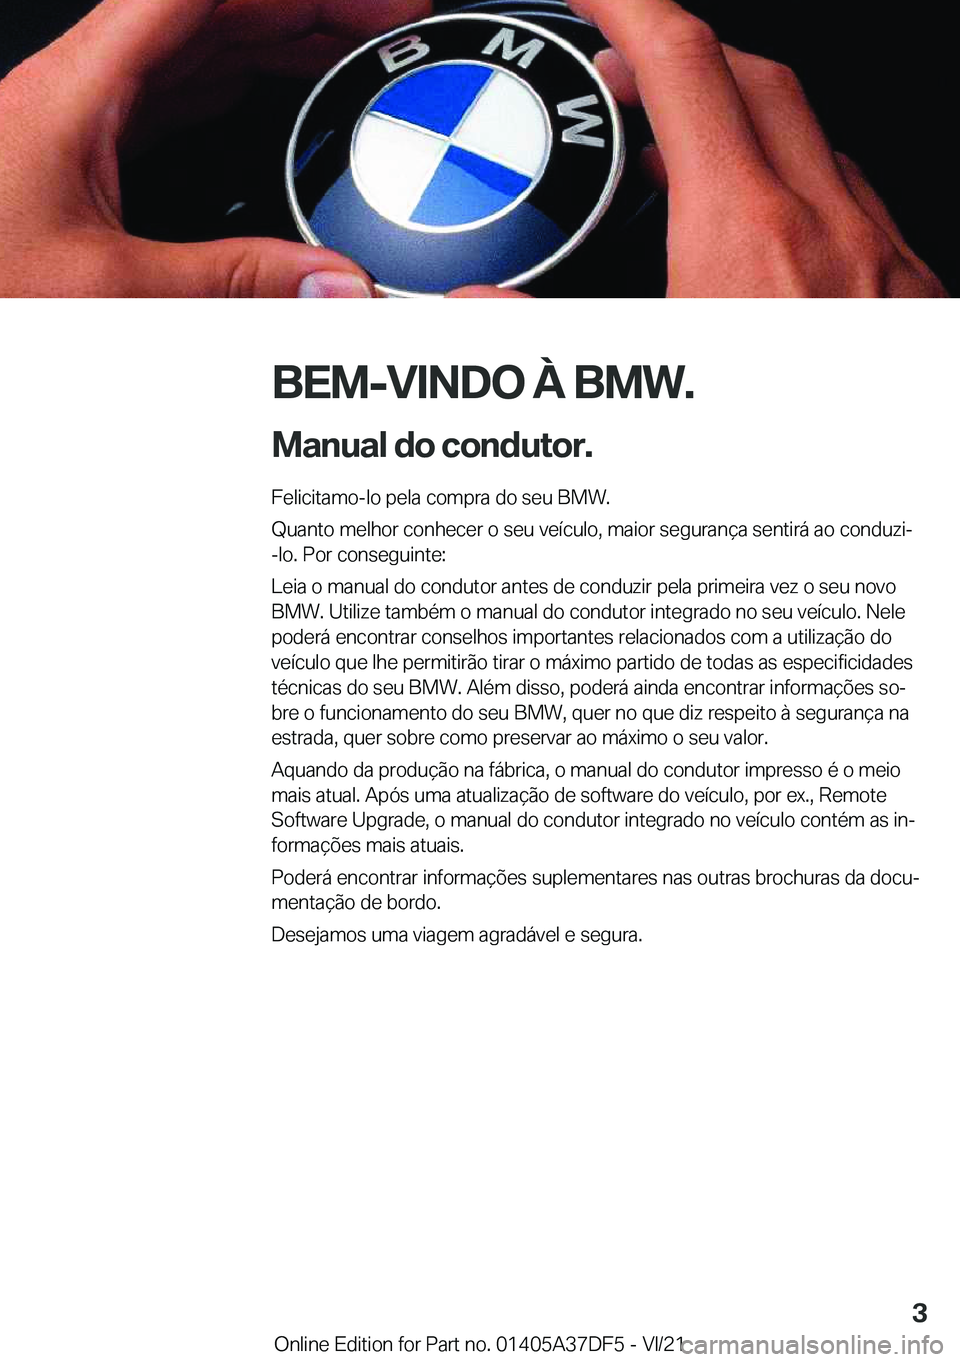 BMW M8 GRAN COUPE 2022  Manual do condutor (in Portuguese) �B�E�M�-�V�I�N�D�O��À��B�M�W�.
�M�a�n�u�a�l��d�o��c�o�n�d�u�t�o�r�. �F�e�l�i�c�i�t�a�m�o�-�l�o��p�e�l�a��c�o�m�p�r�a��d�o��s�e�u��B�M�W�.
�Q�u�a�n�t�o��m�e�l�h�o�r��c�o�n�h�e�c�e�r��o��s